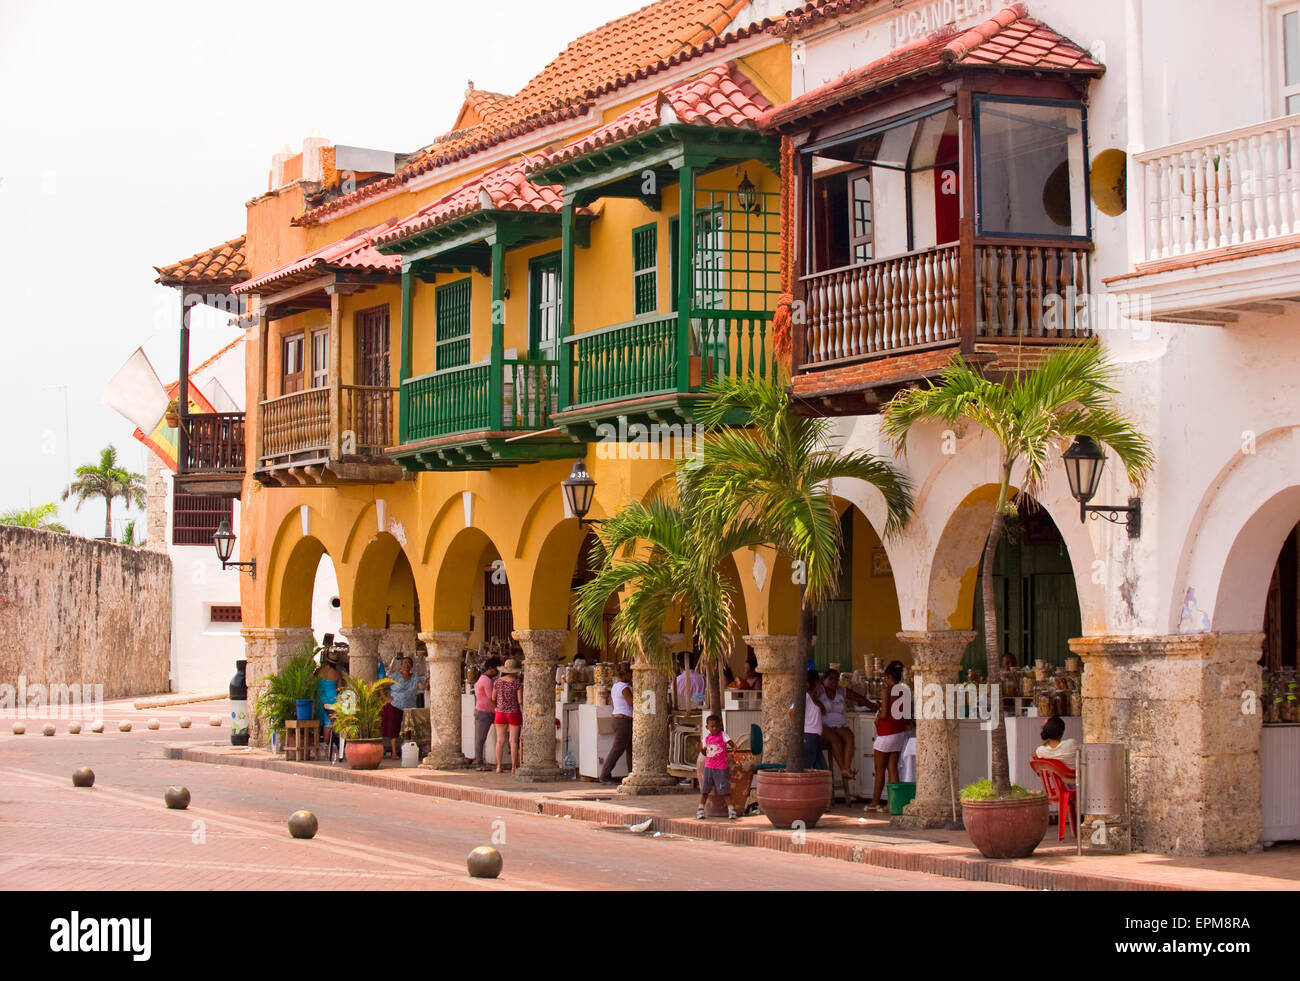 Buildings in Plaza de los Coches (Car Square) in Cartagena, Colombia, South America Stock Photo